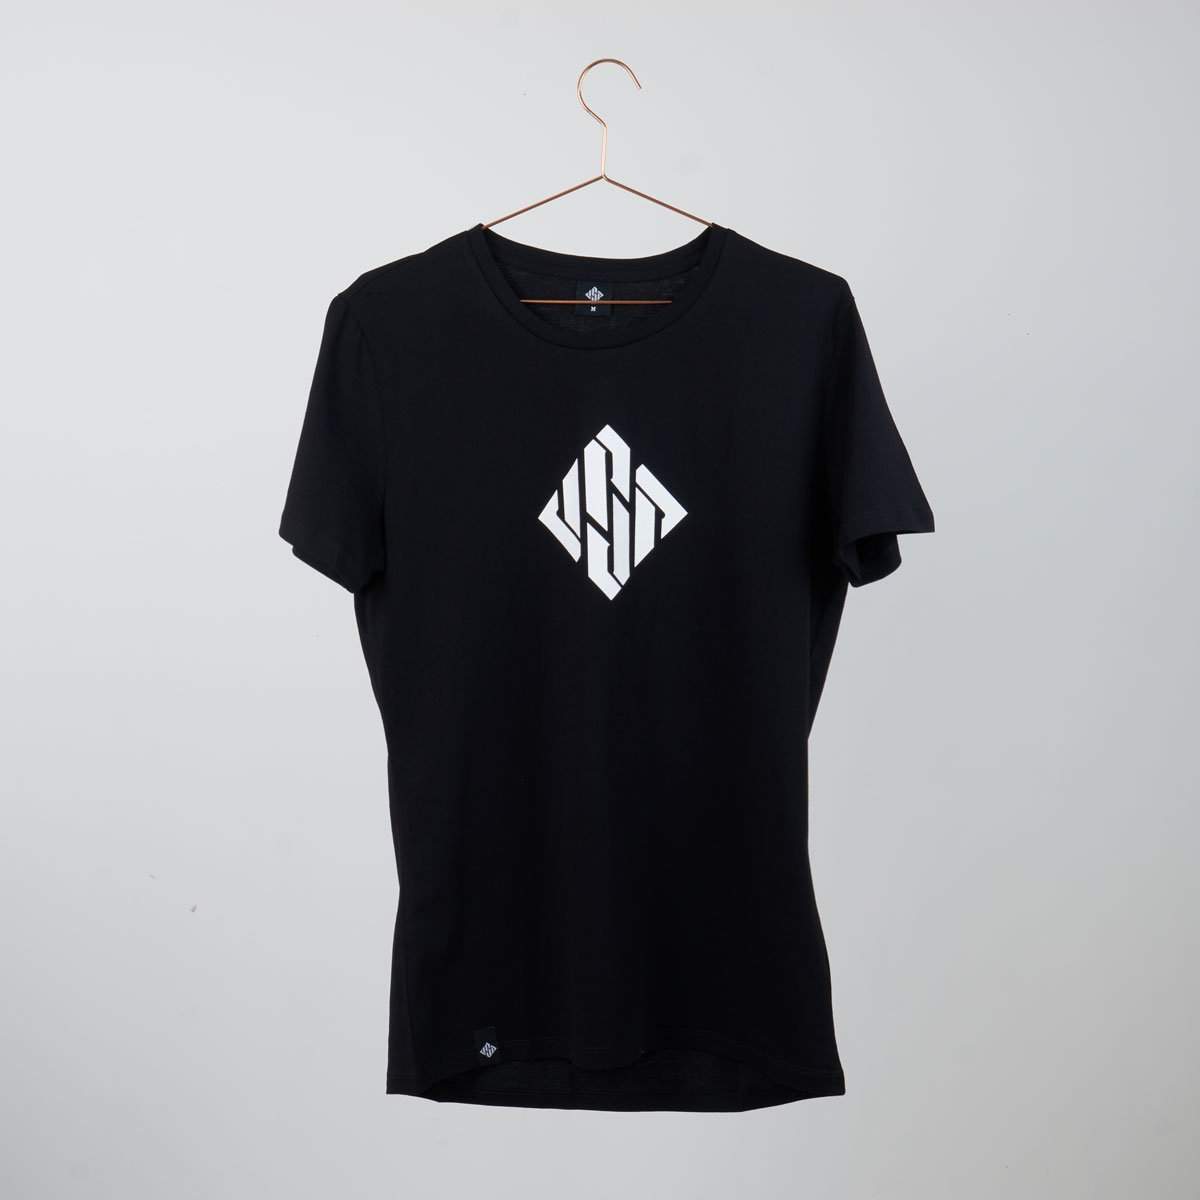 USD Diamond Black T-shirt-USD-Aggressive Skate,black,Clothing,T-shirts